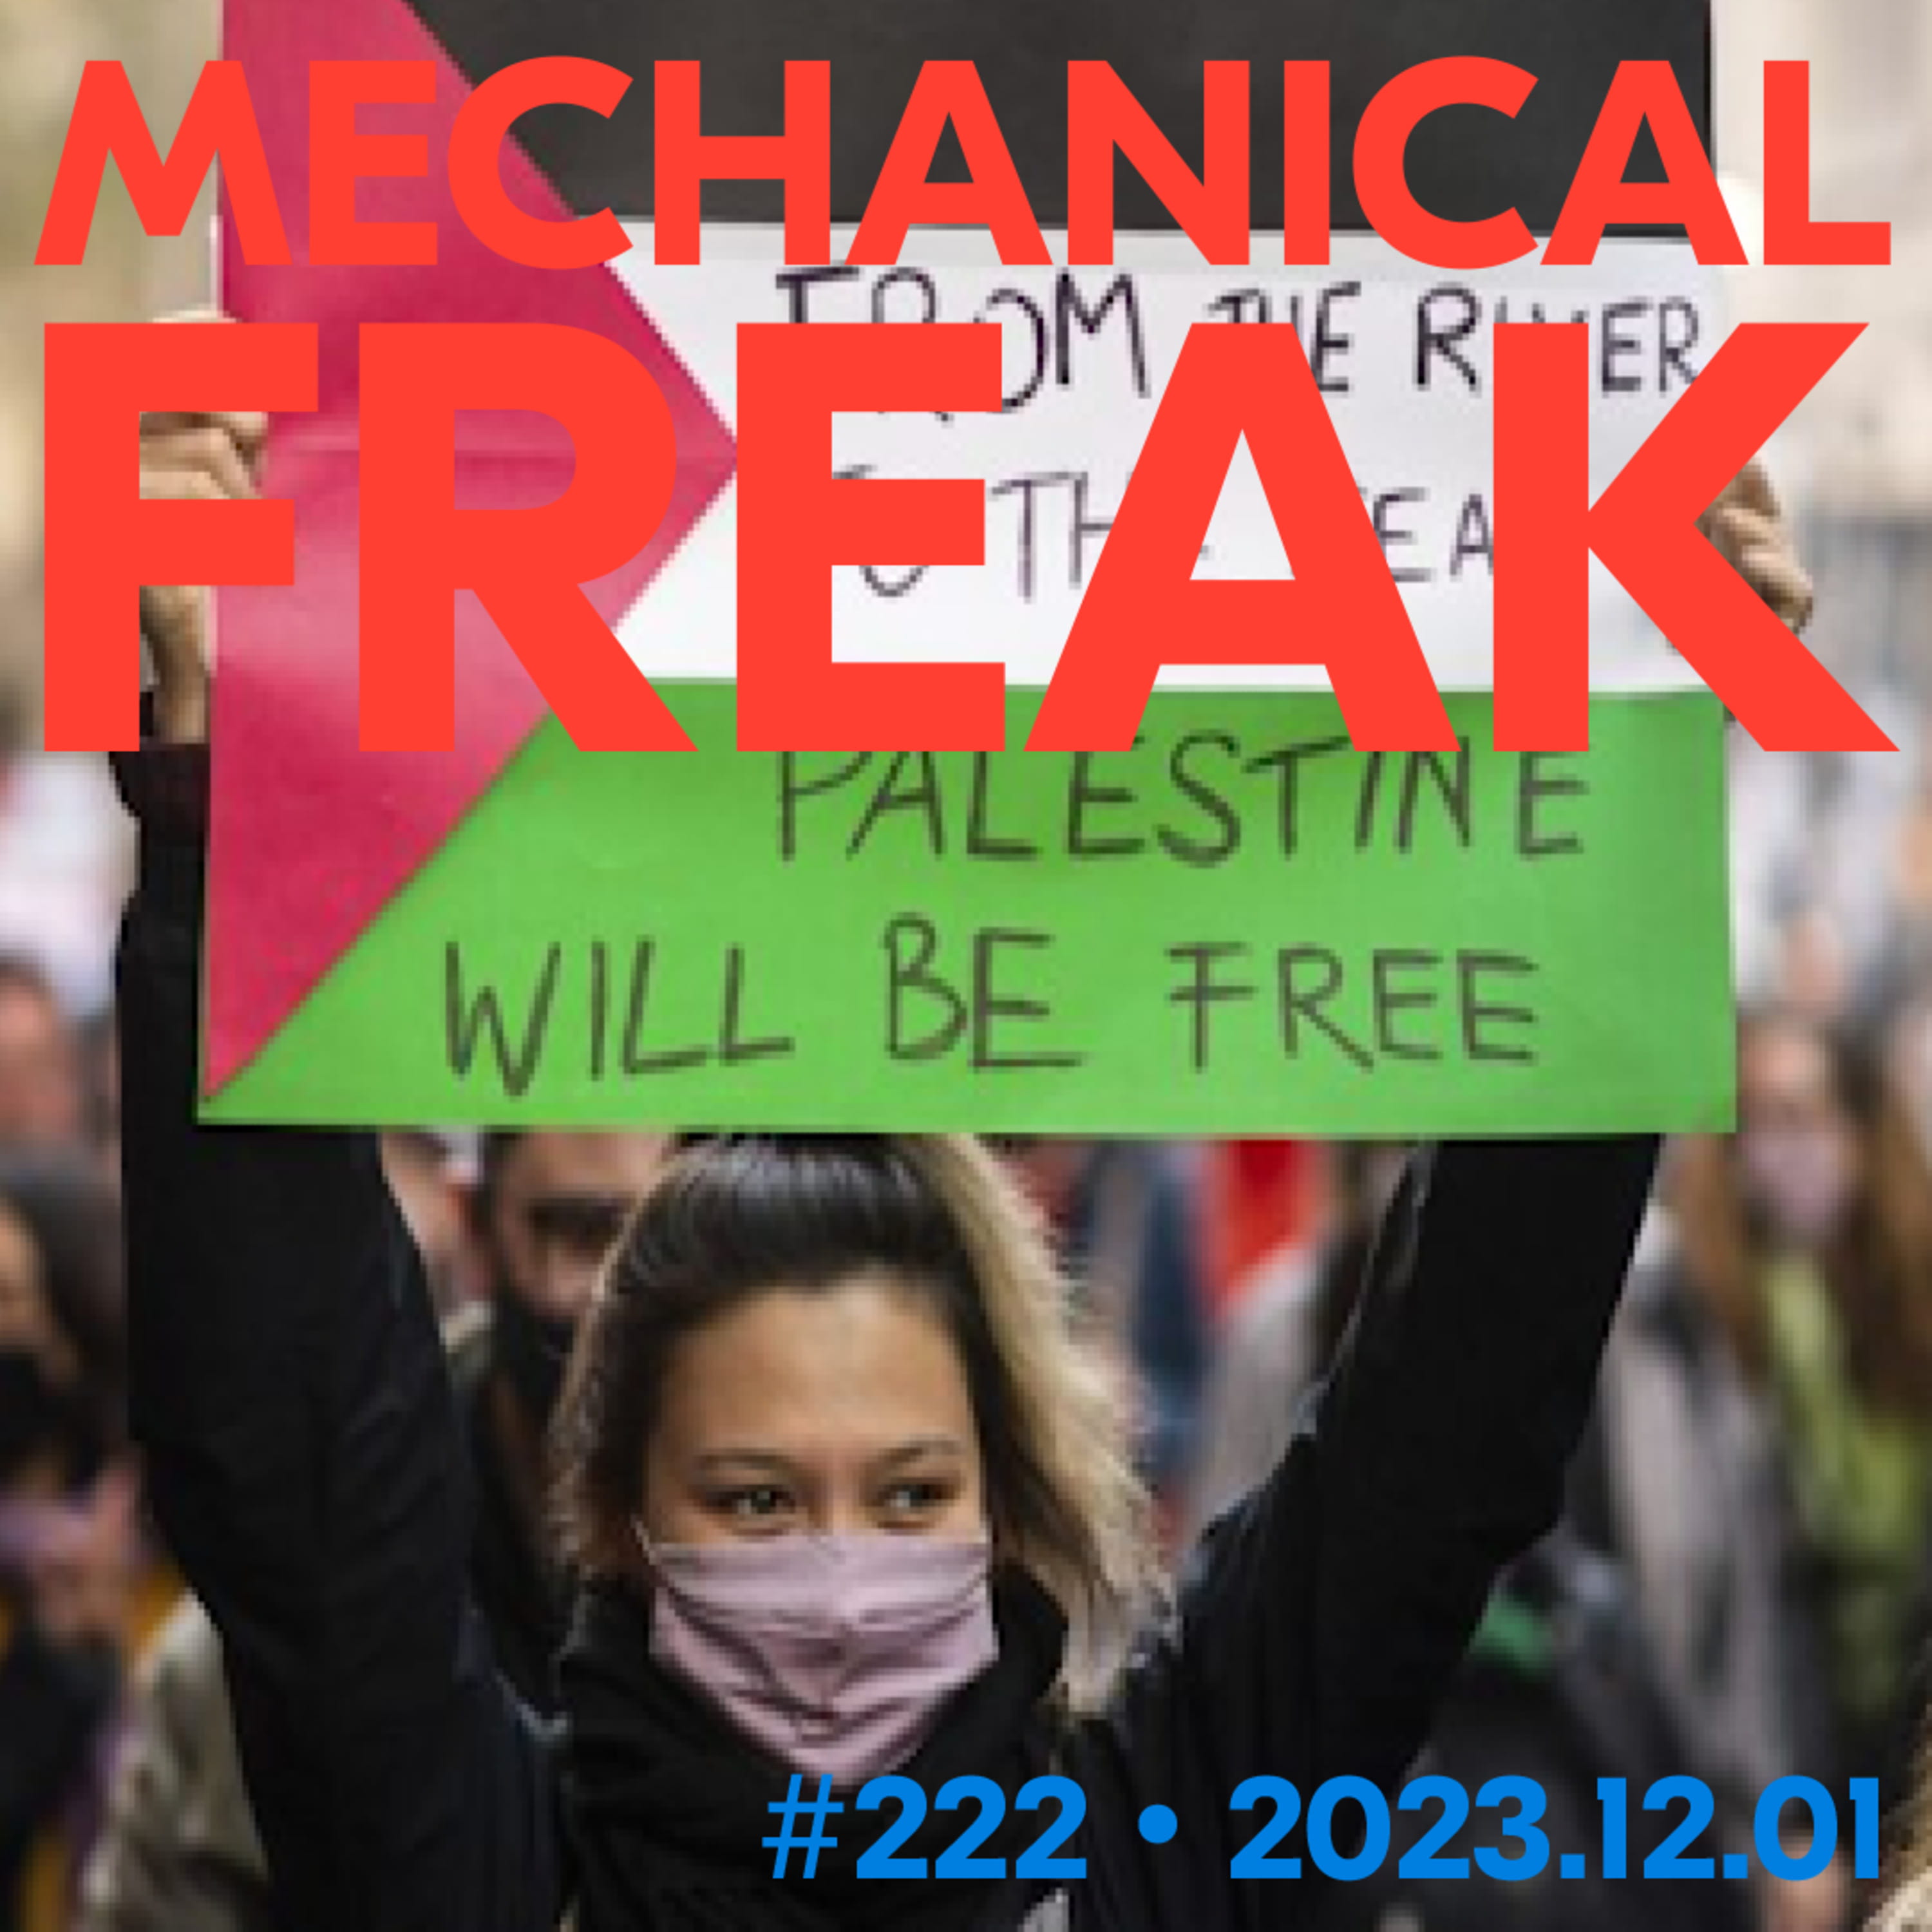 Episode #mechanical-freak-222 cover